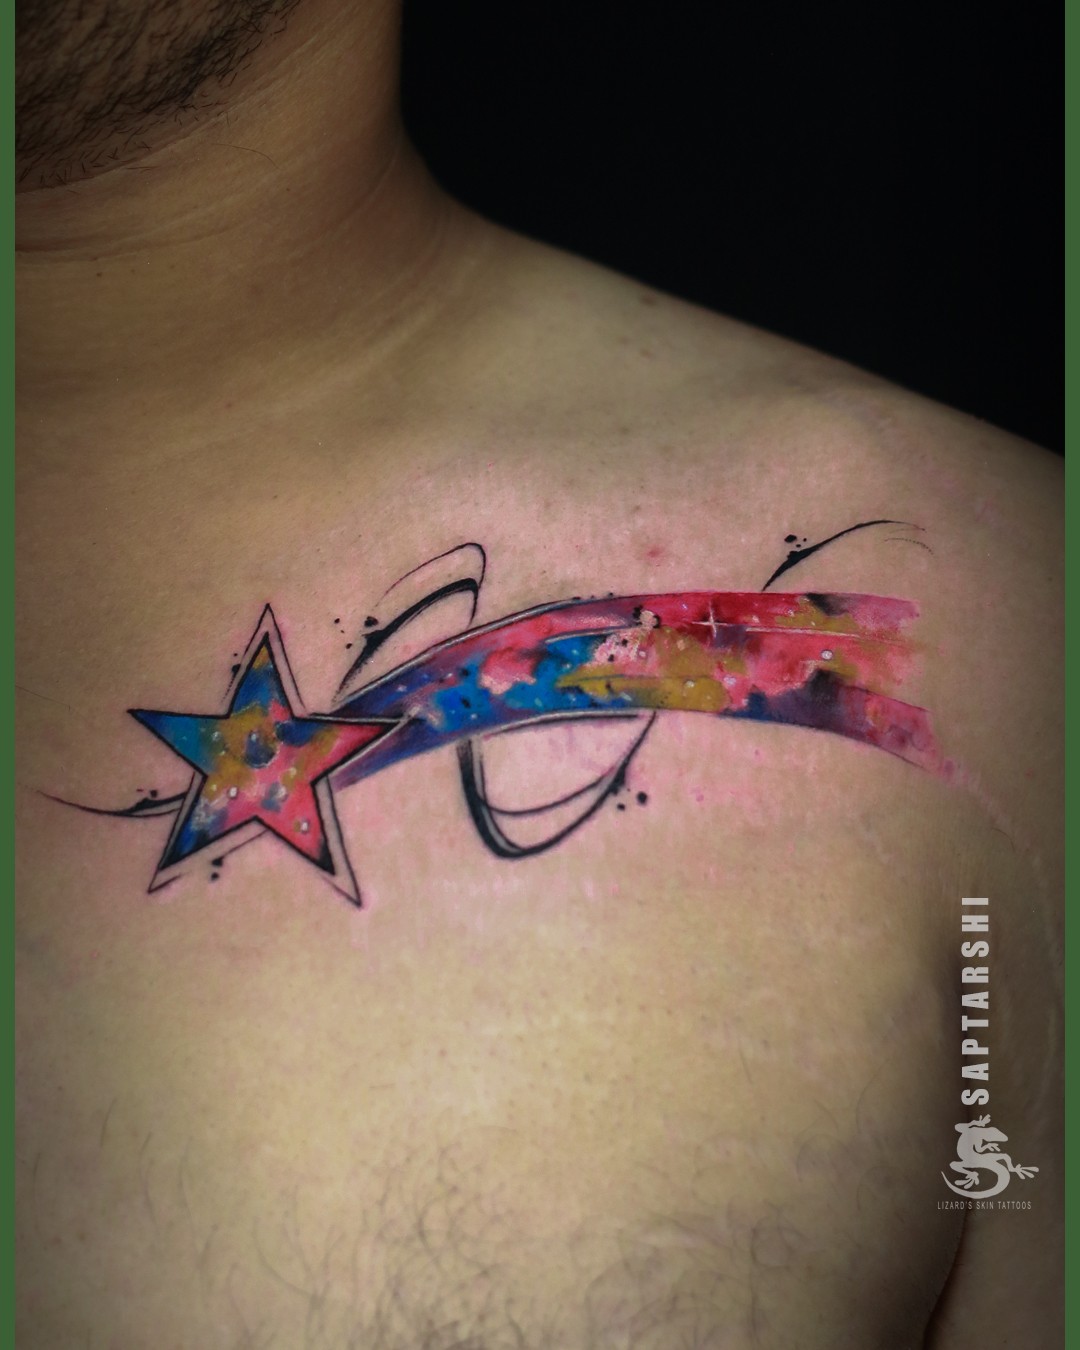 Tatuaje de estrella acuarela vibrante